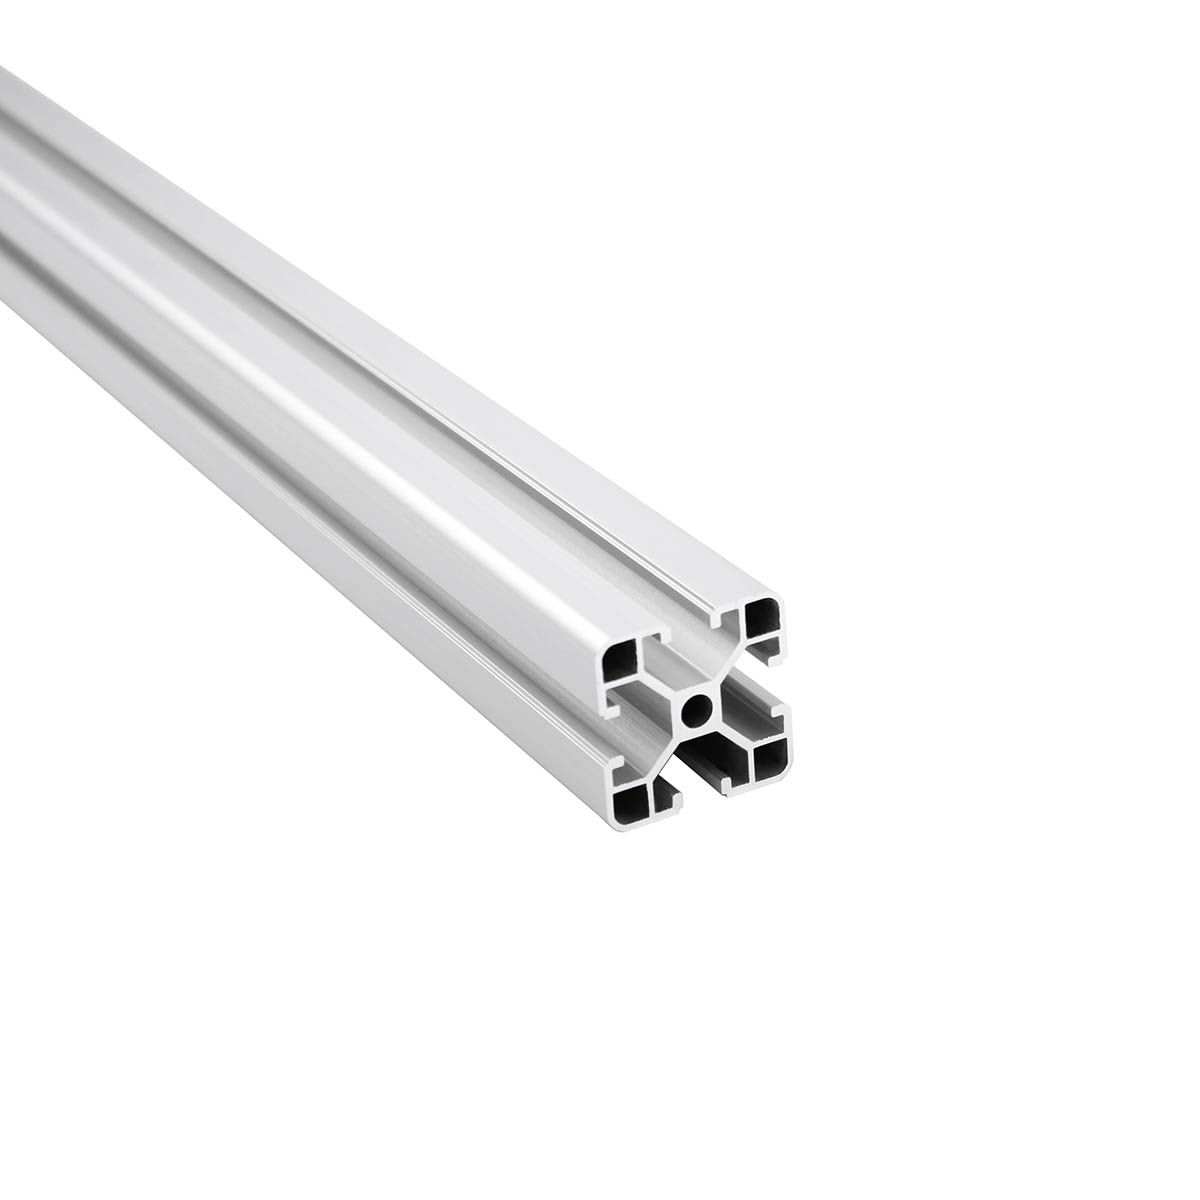 2PCS 4040 Aluminum Profile Extrusion 100mm - 1000mm European Standard Linear Rail Aluminum Profile 4040 Extrusion CNC 3D Printer